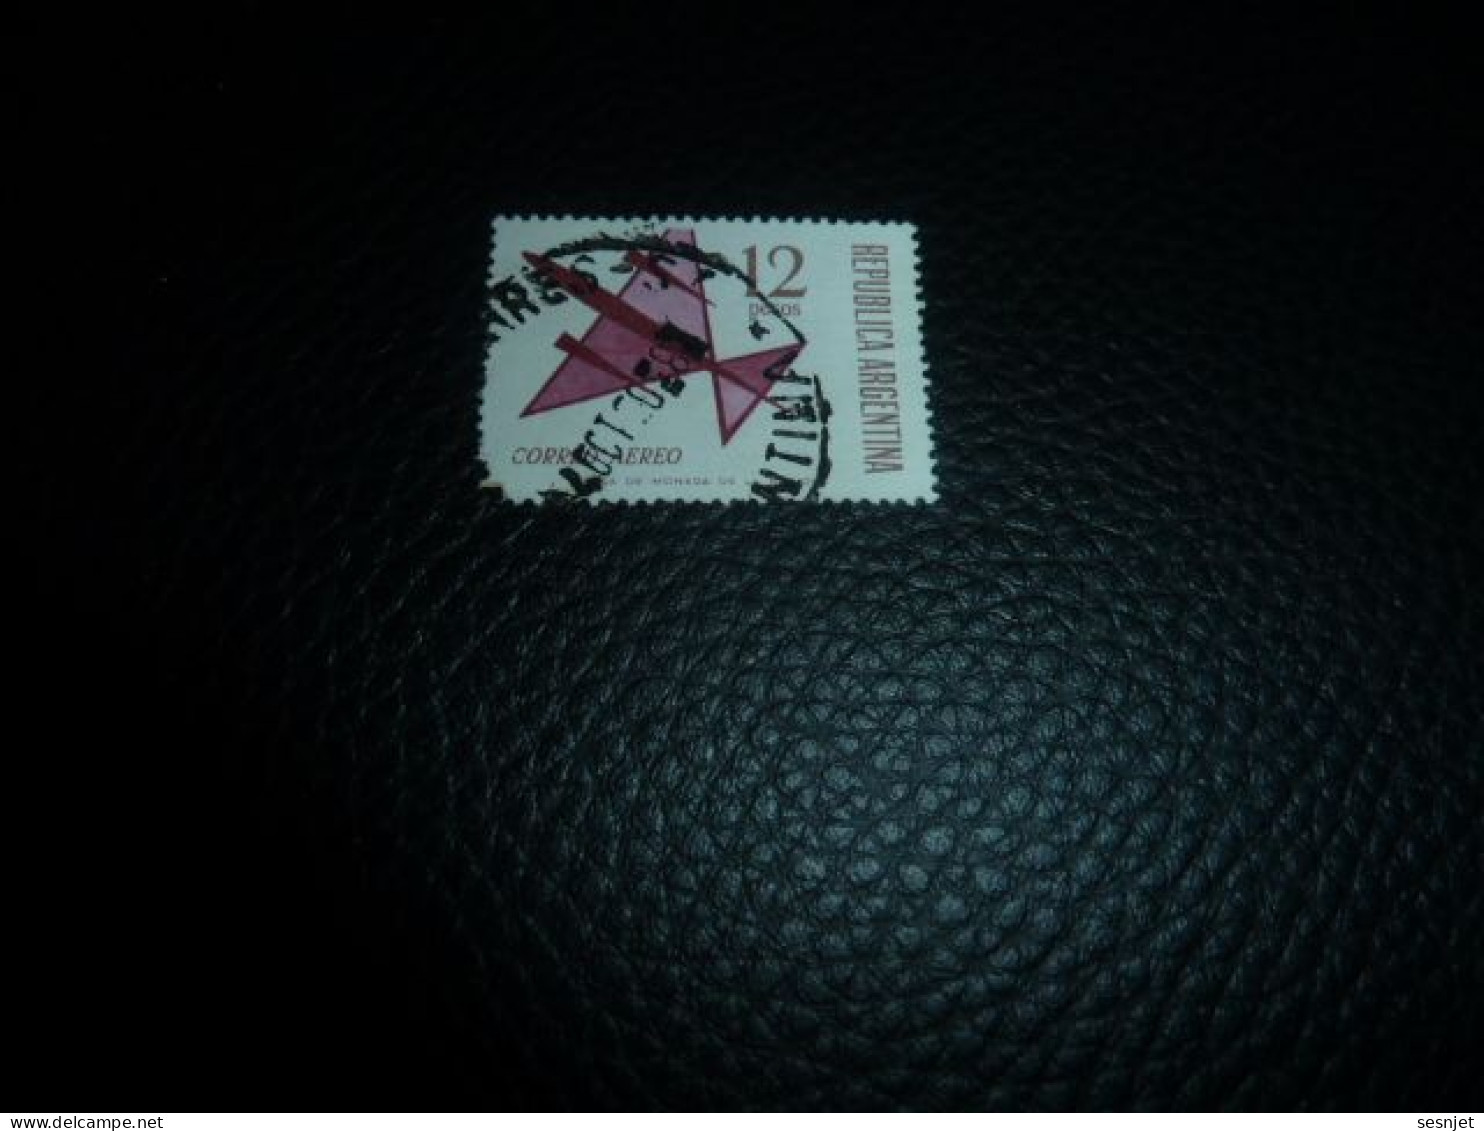 Republica Argentina - Correo Aereo - 12 Pesos - Yt 108 - Brun, Lilas-brun Et Lilas - Oblitéré - Année 1965 - - Used Stamps